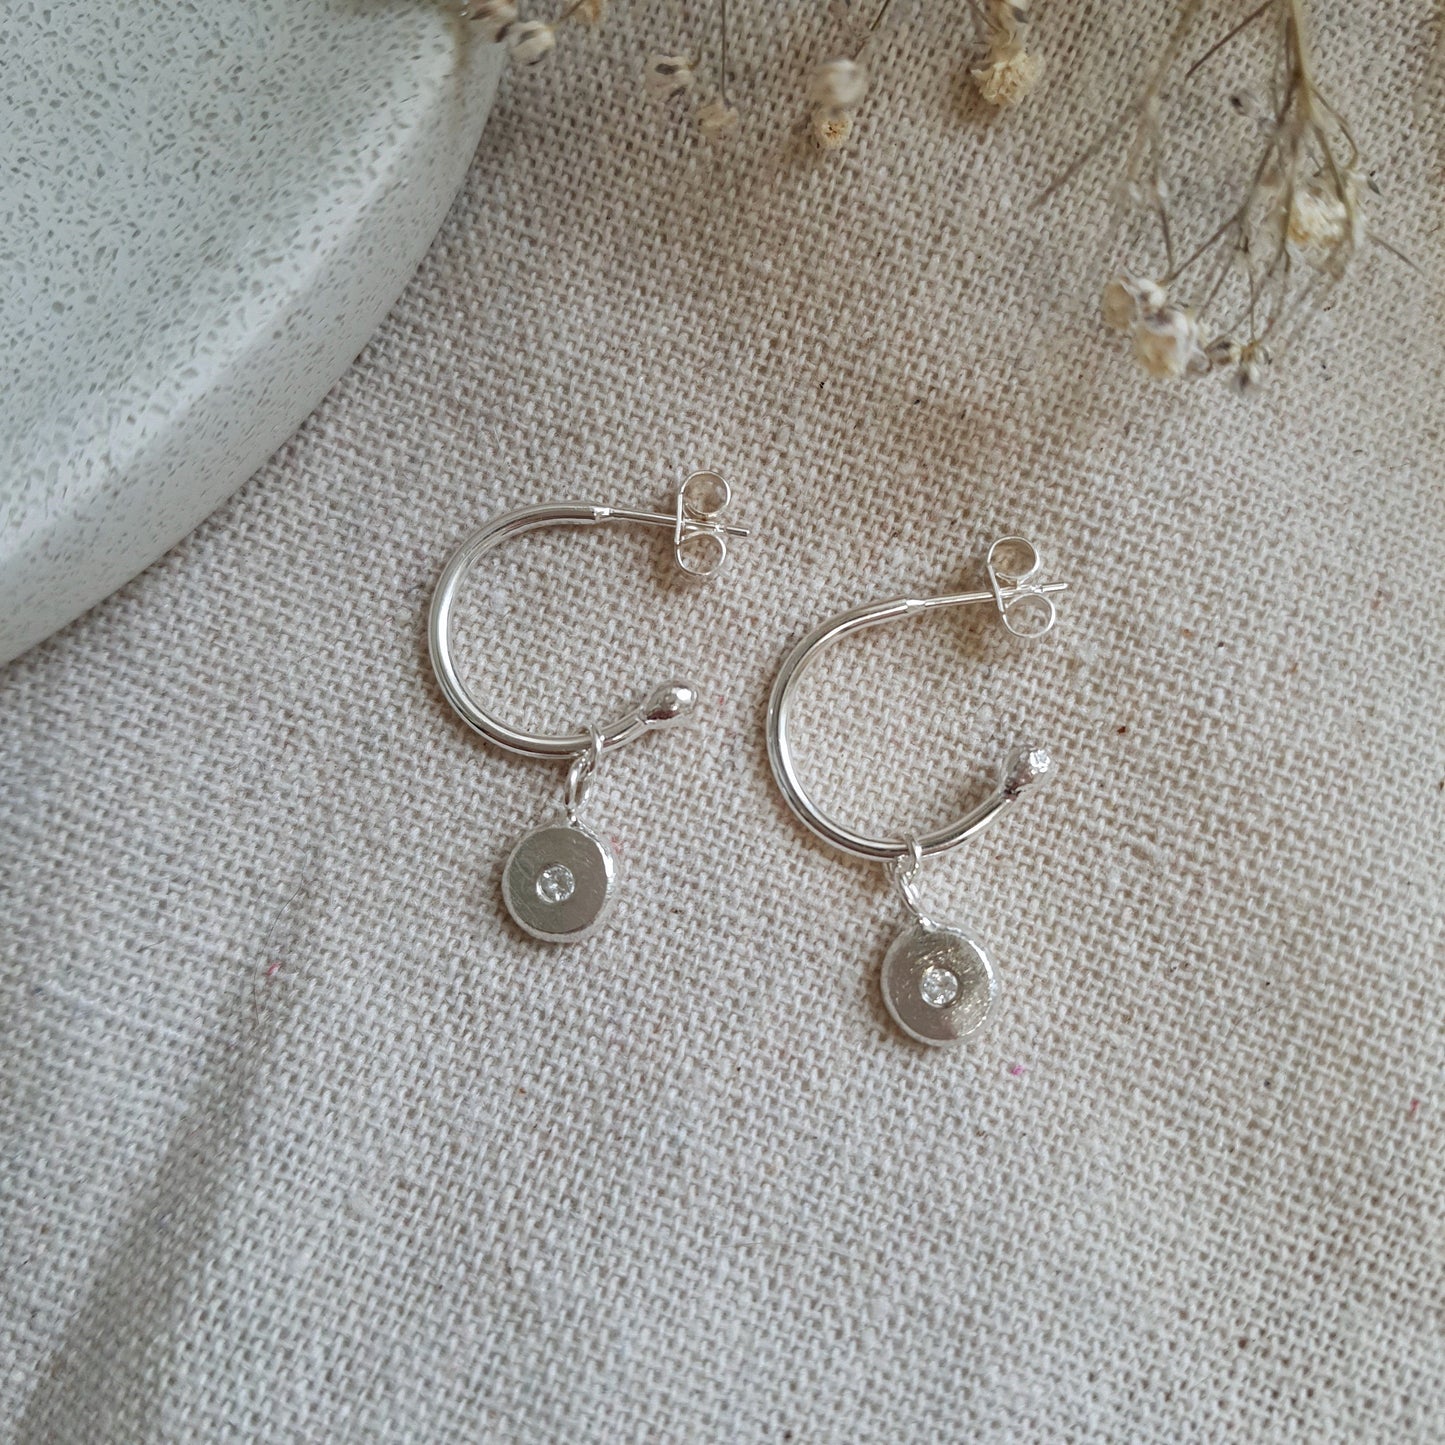 White Topaz & Silver Hoop Earrings  handmade silver Earrings by Anna Calvert Jewellery in the UK